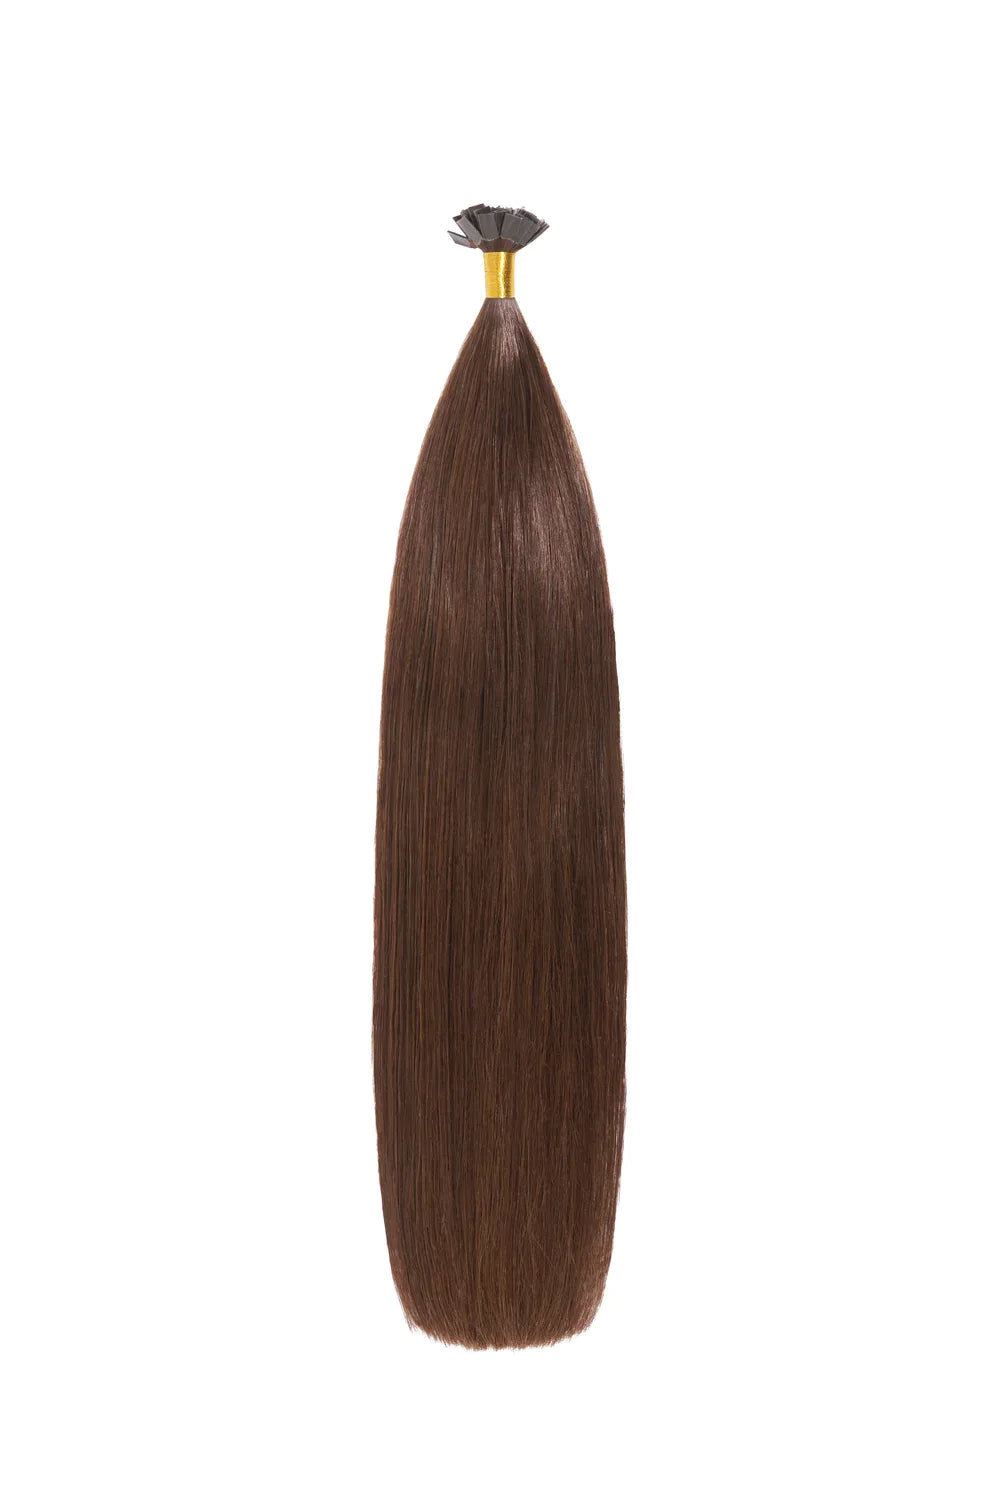 Medium Brown (#4) Remy Royale Flat Tip Hair Extensions